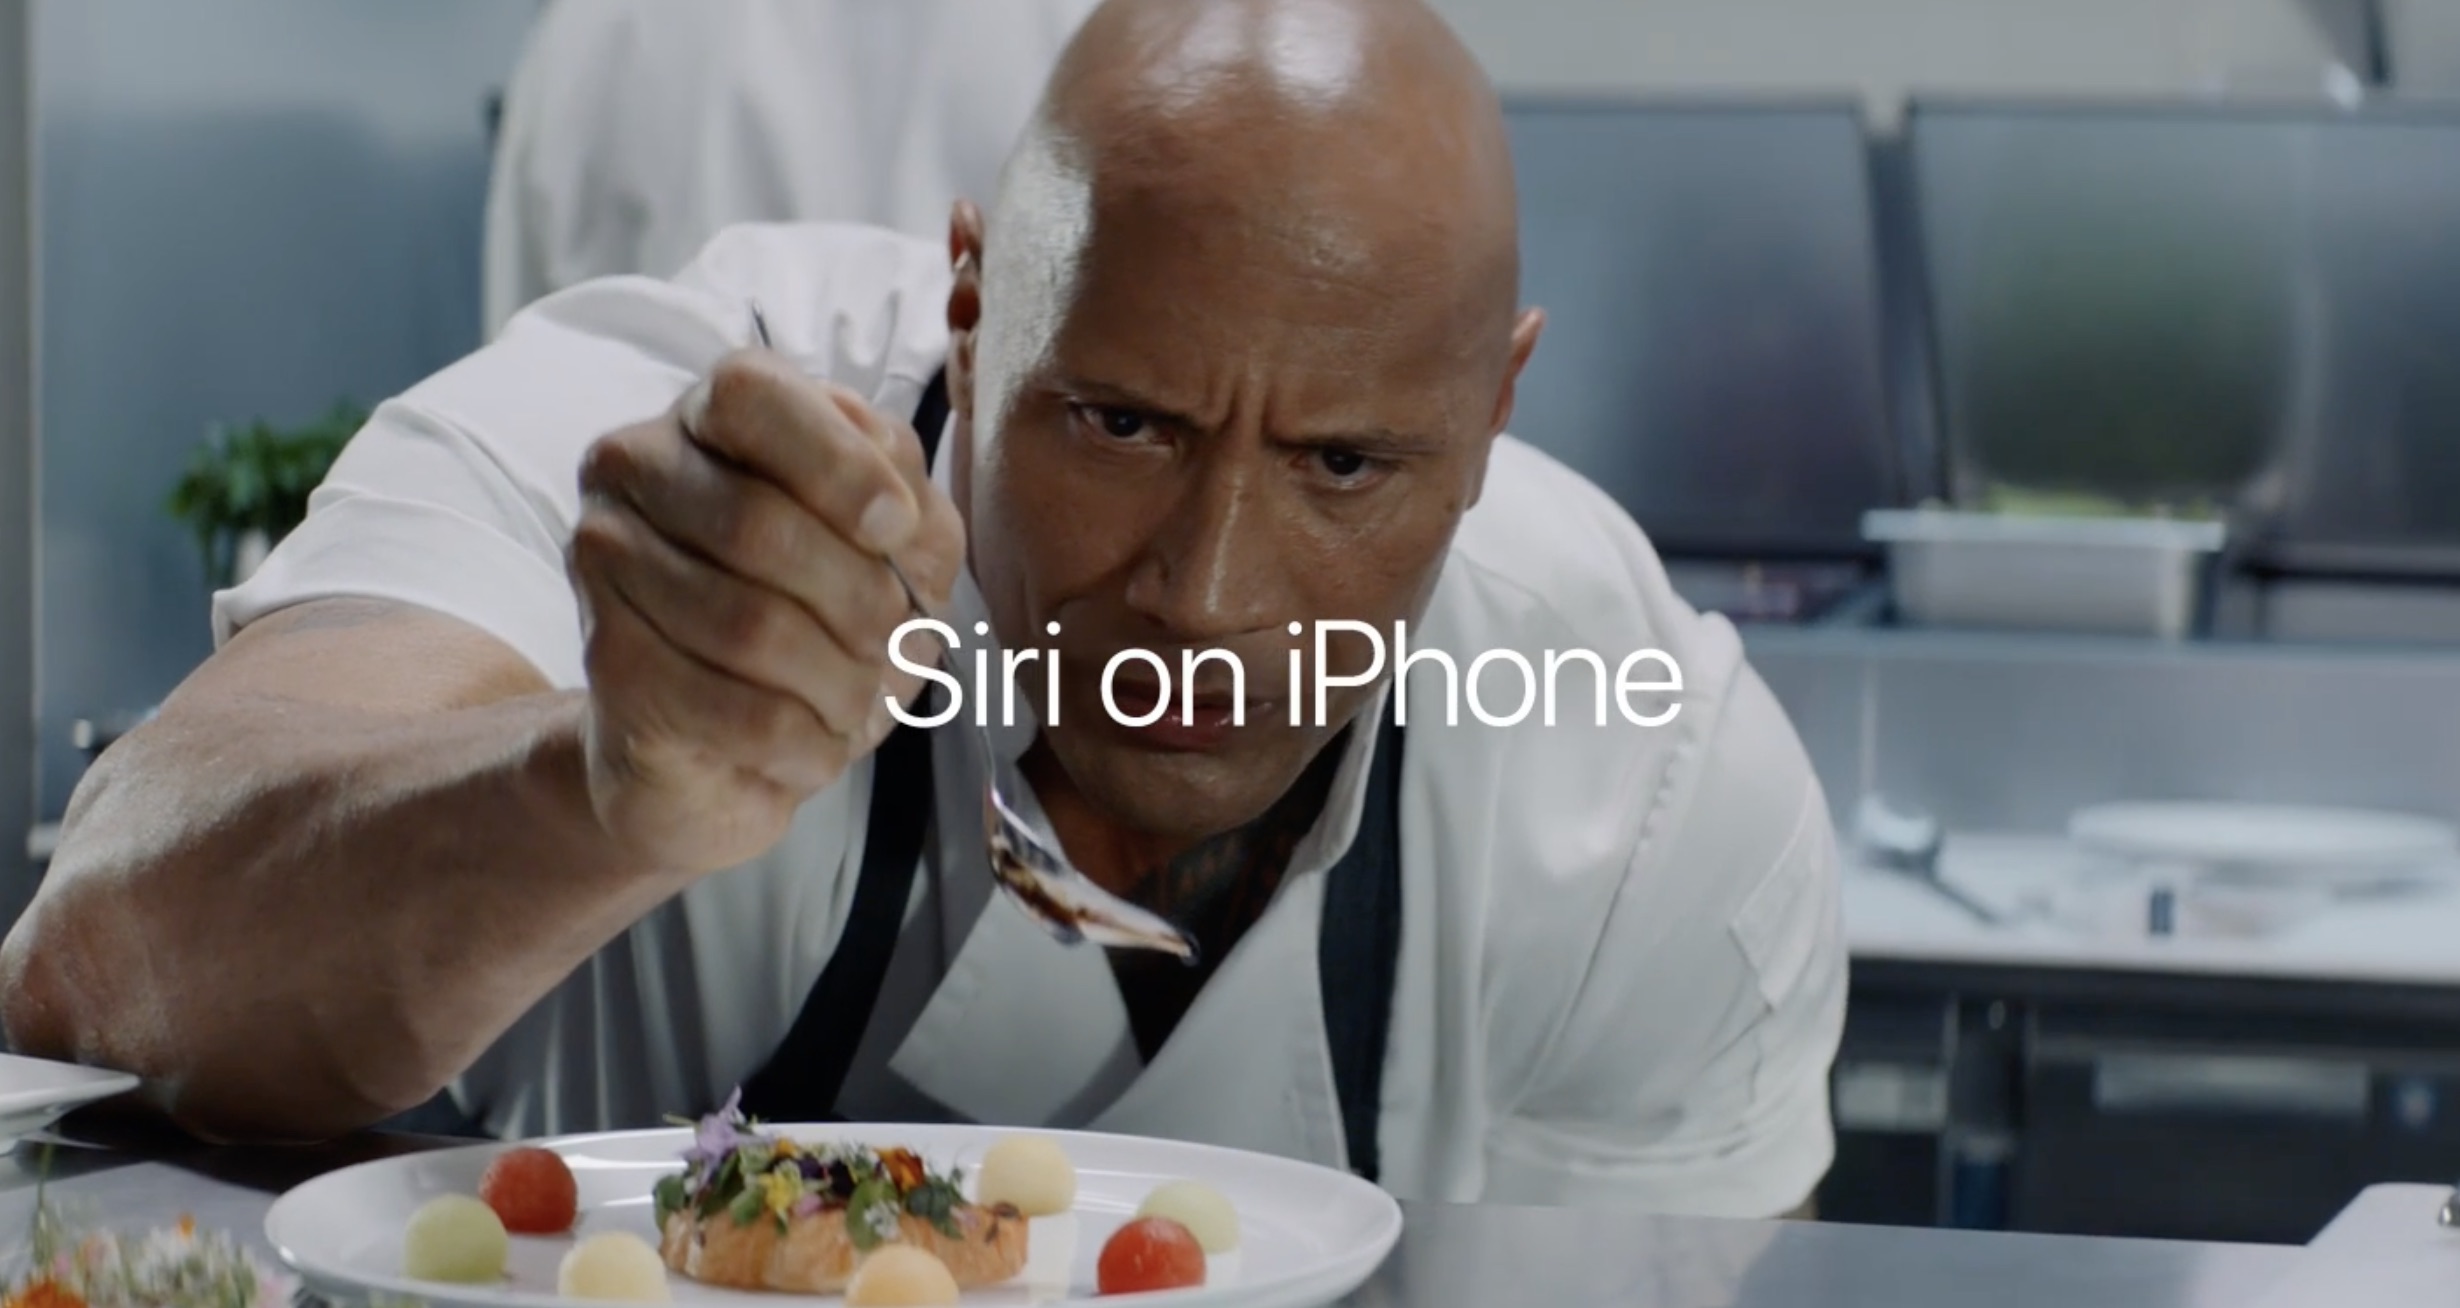 Apple makes a Siri 'movie' with Dwayne 'The Rock' Johnson